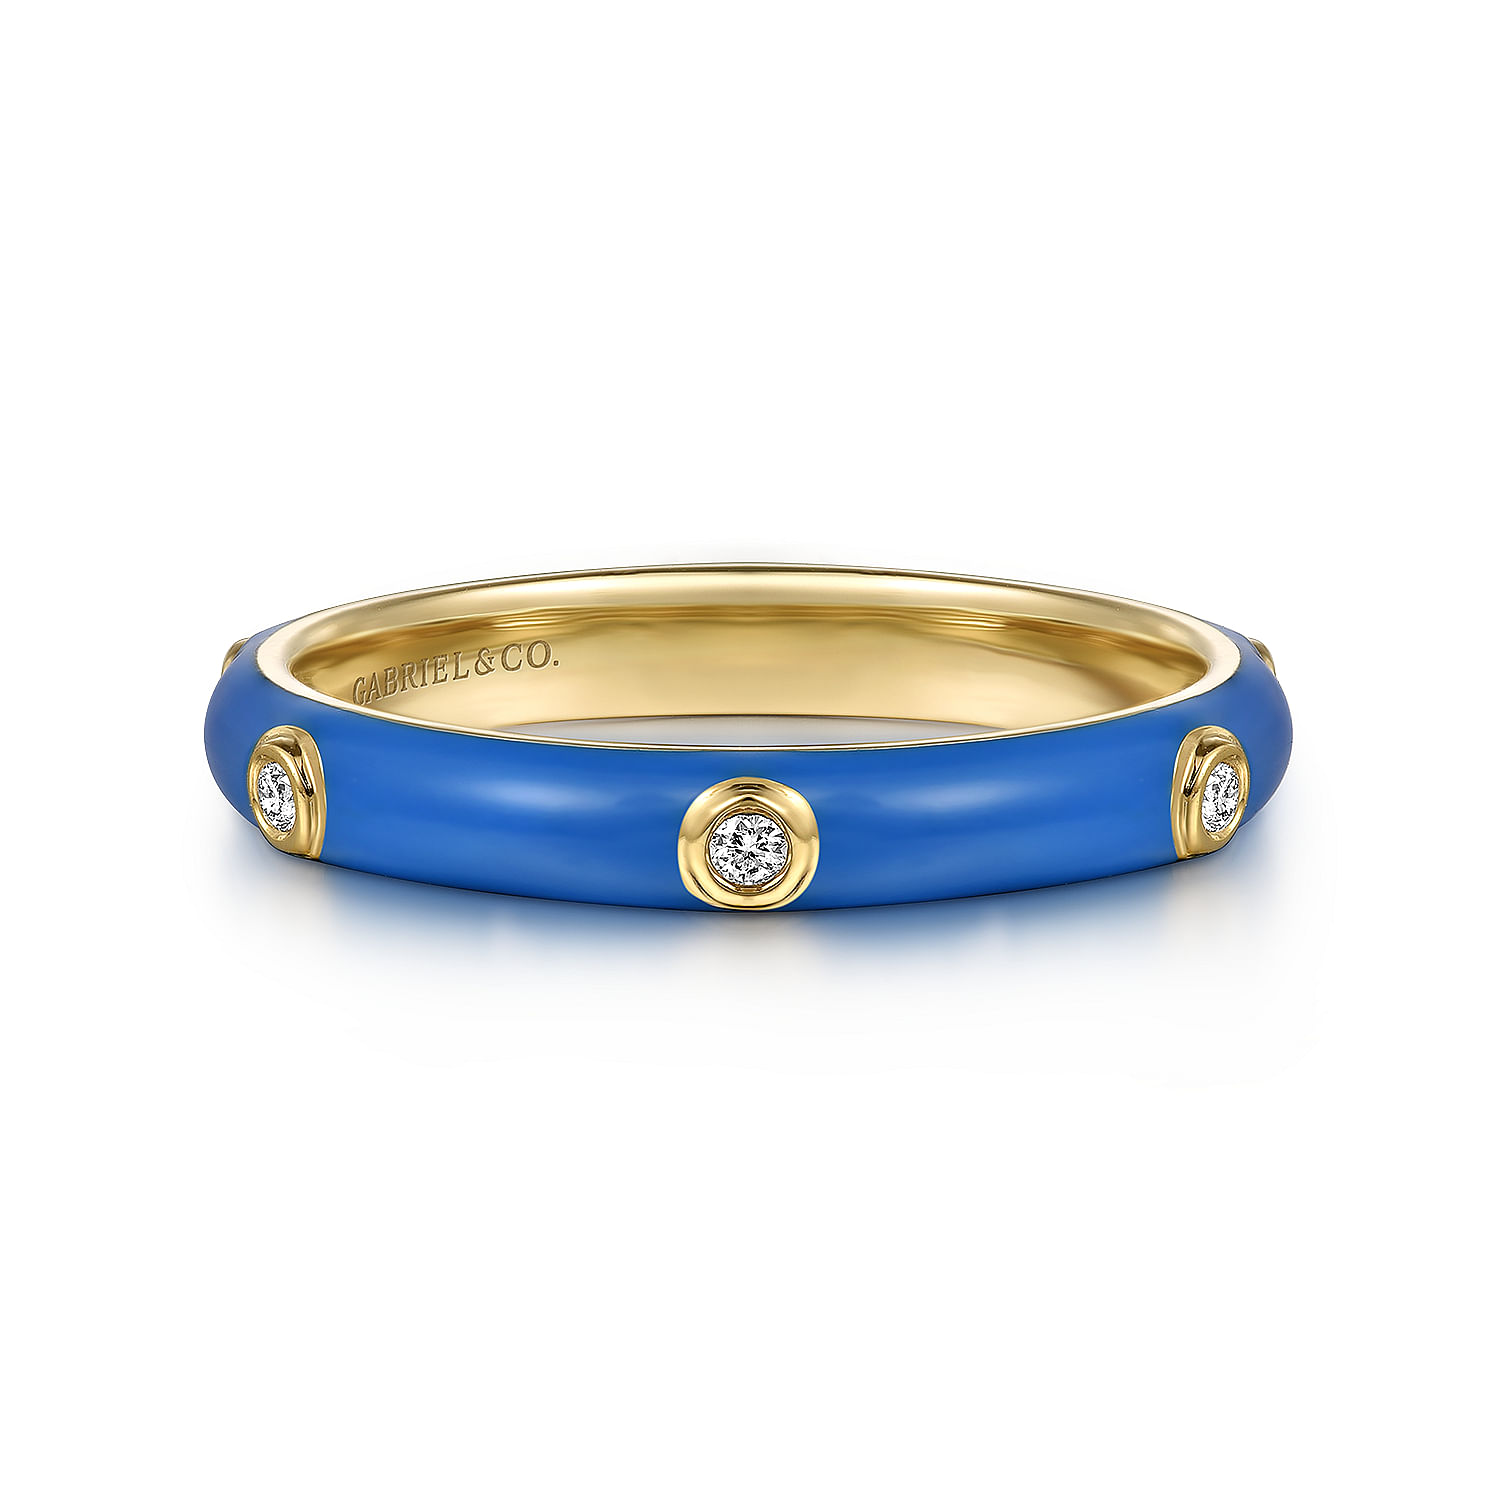 Gabriel & Co. 14K Yellow Gold Diamond and Blue Enamel Ring